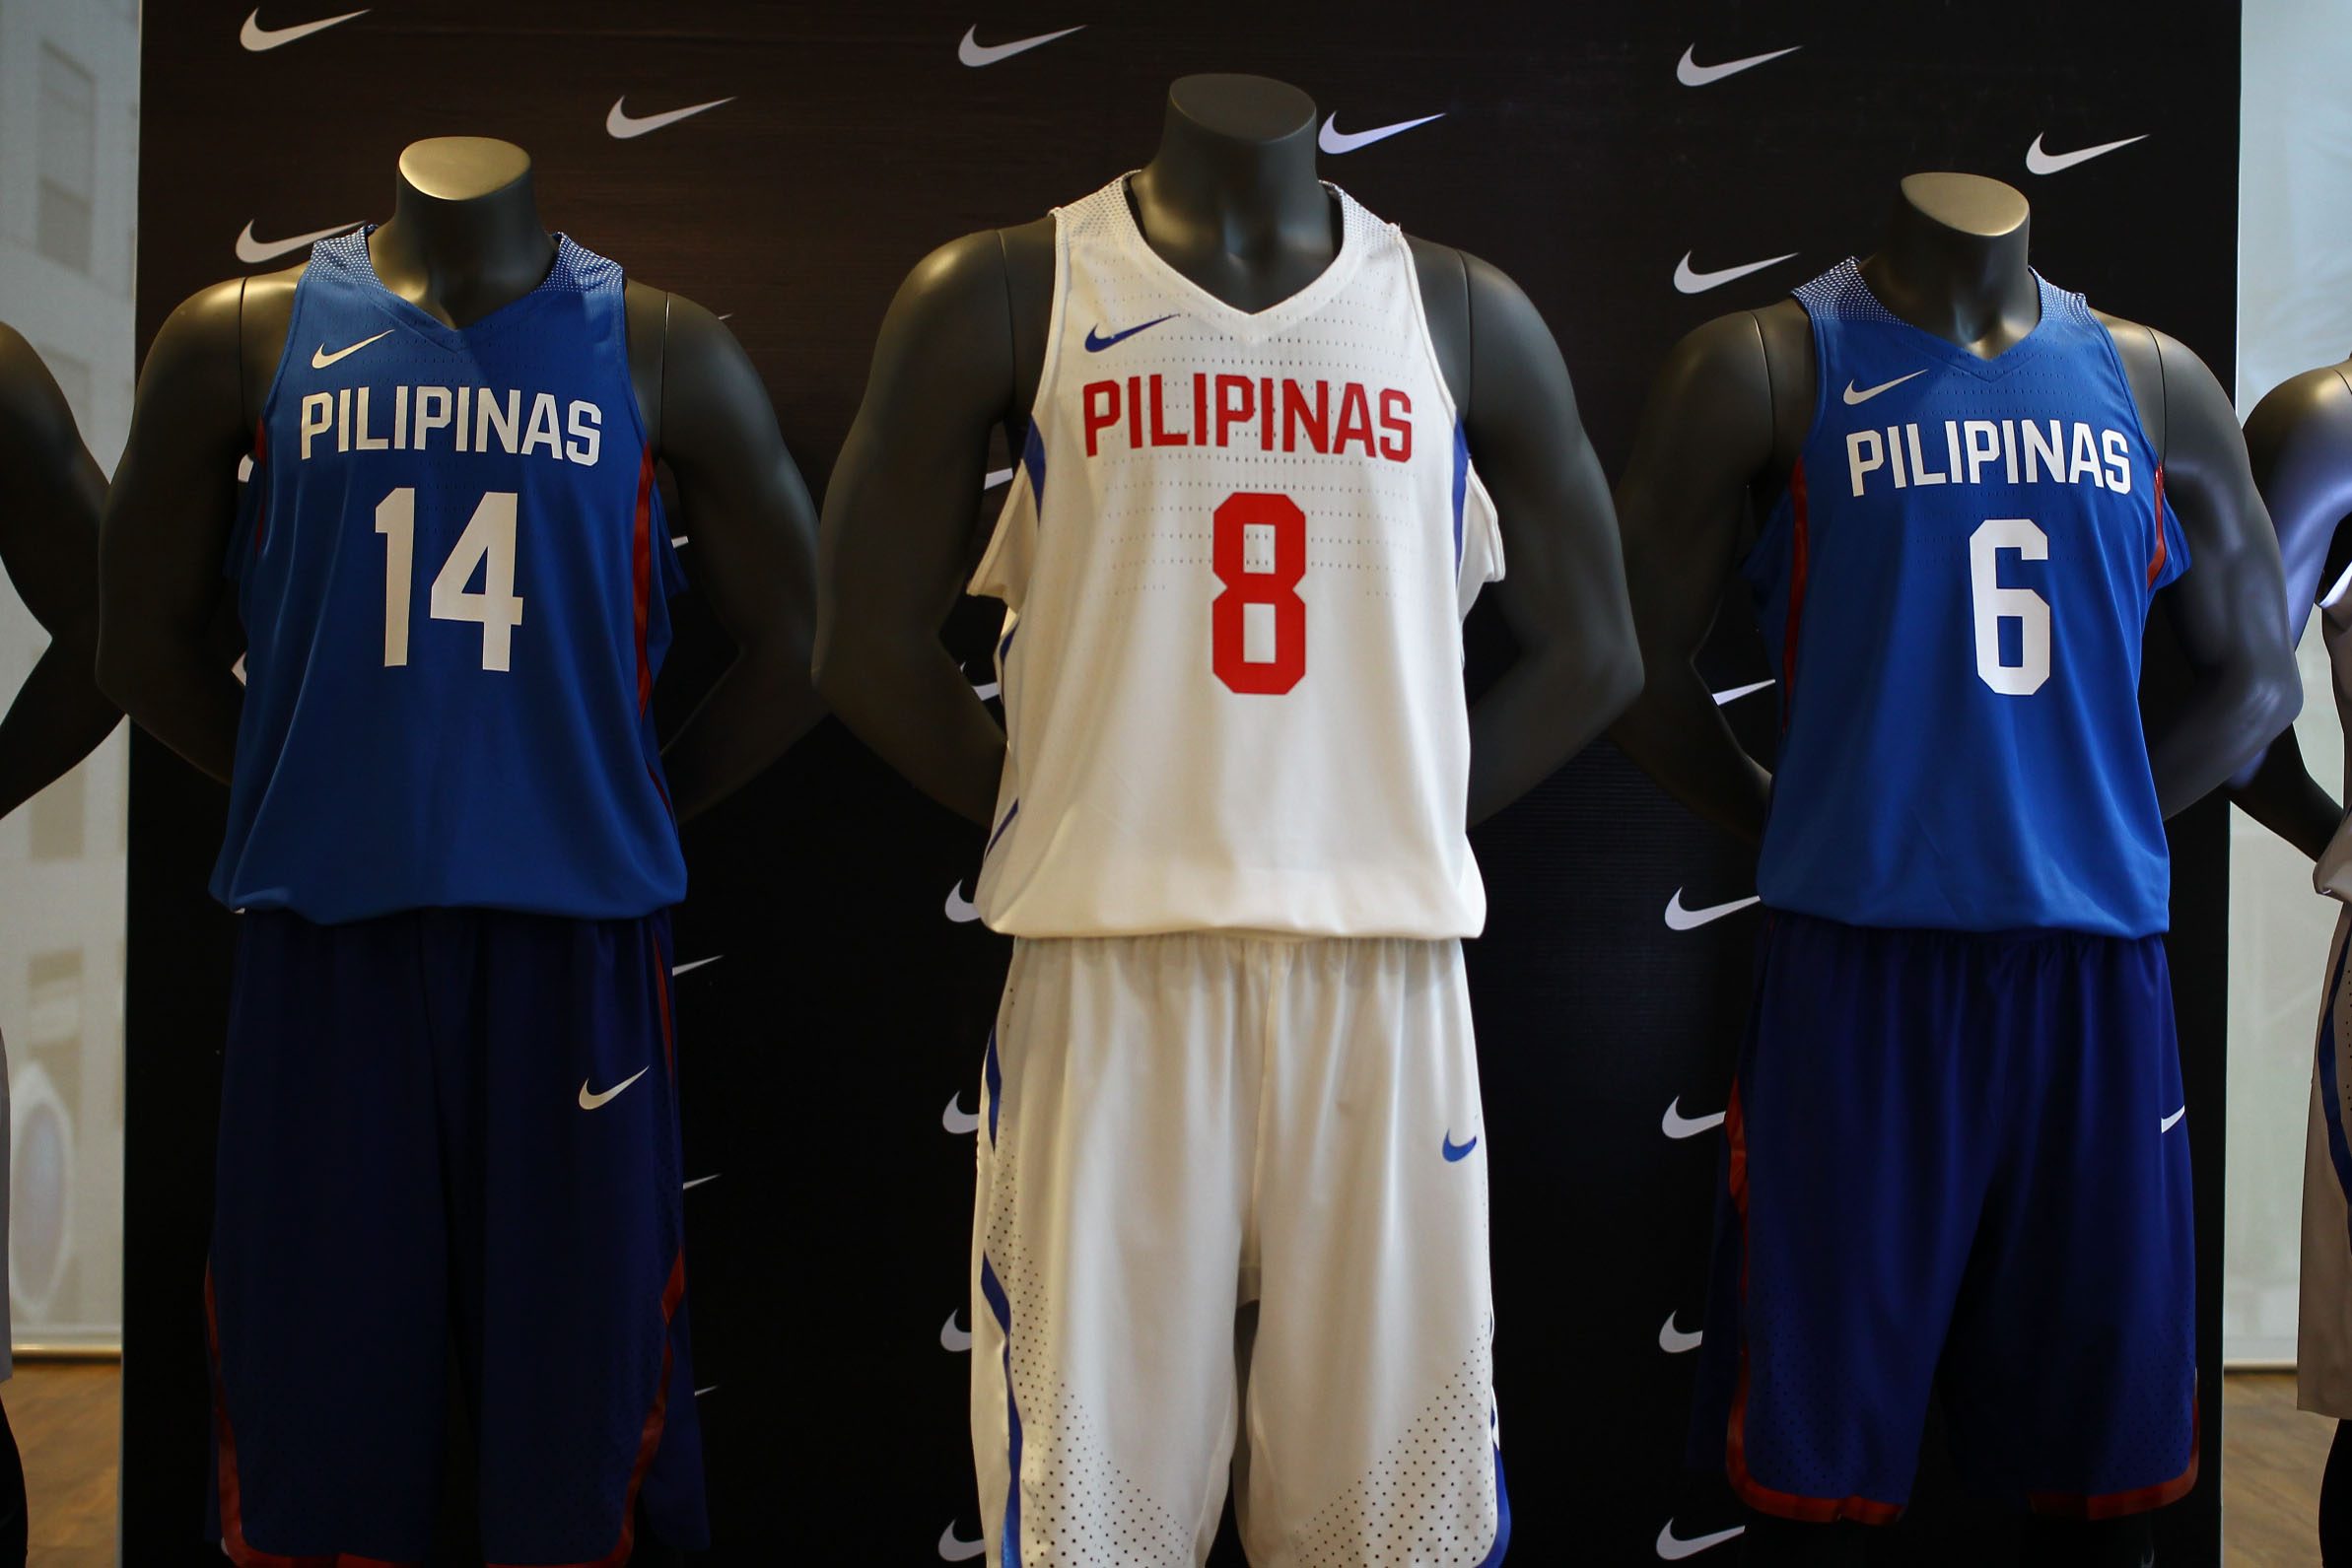 IN PHOTOS New Gilas Pilipinas jerseys unveiled